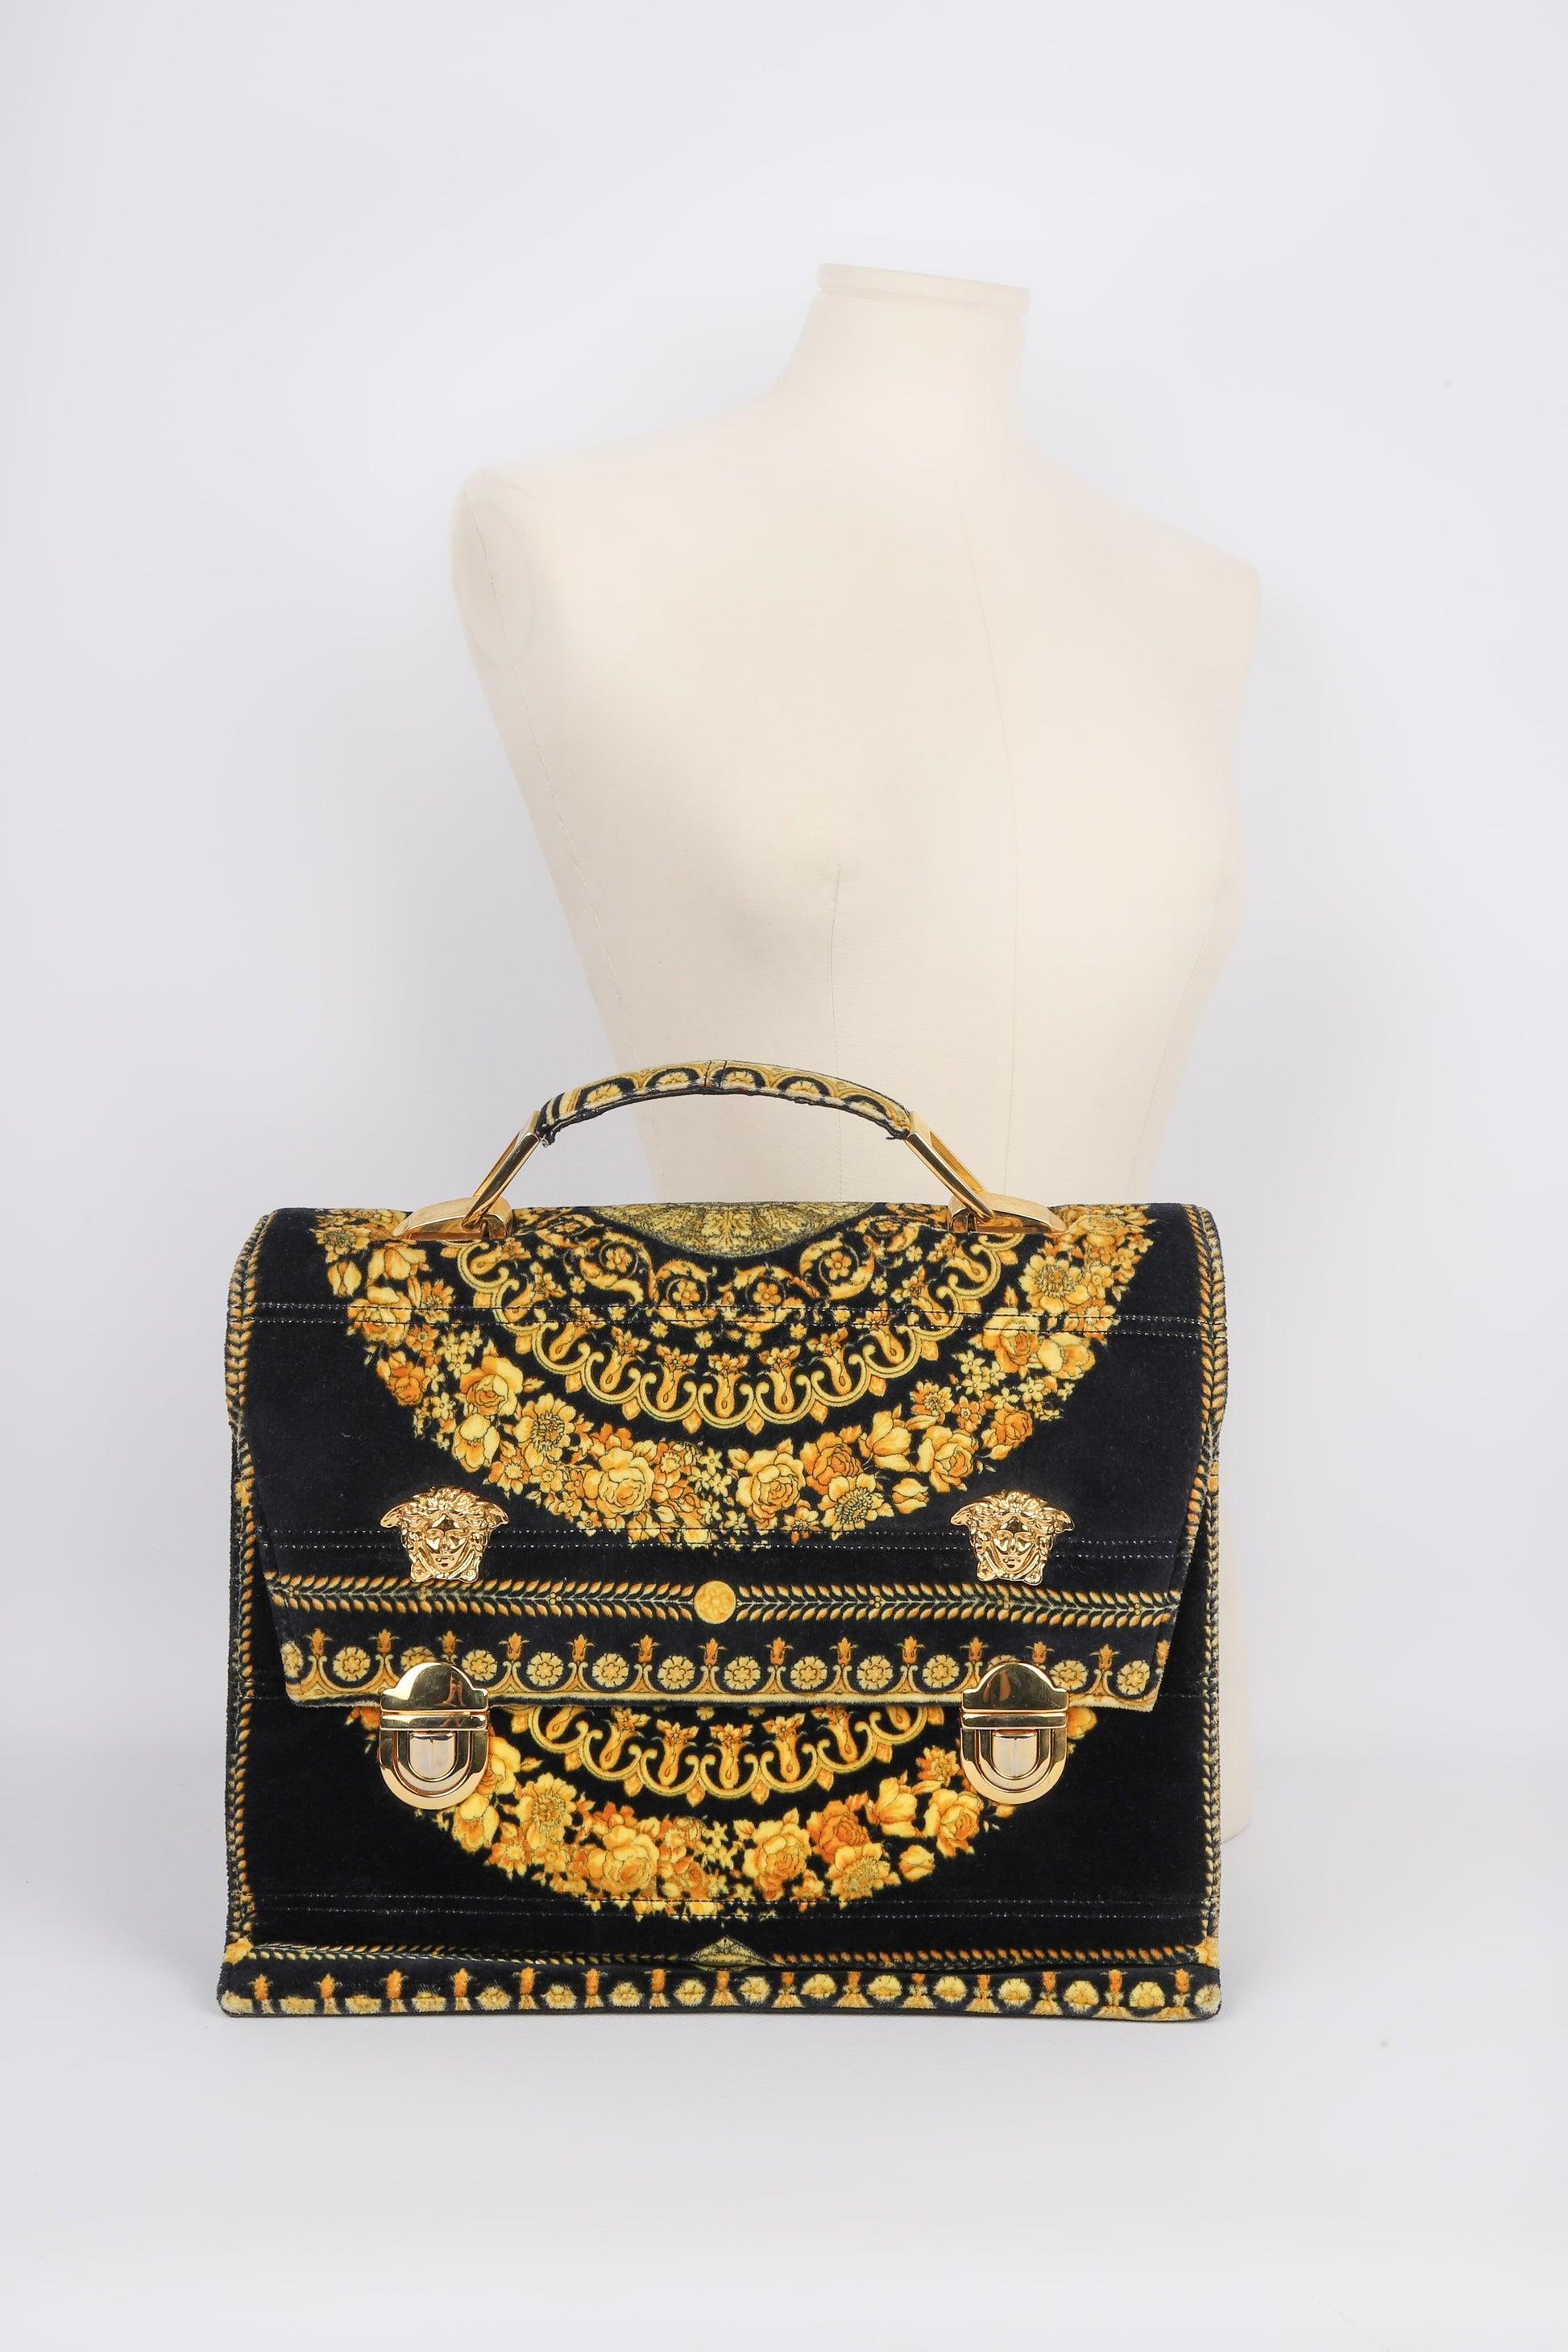 Gianni Versace Black Velvet Bag with Golden Patterns For Sale 5